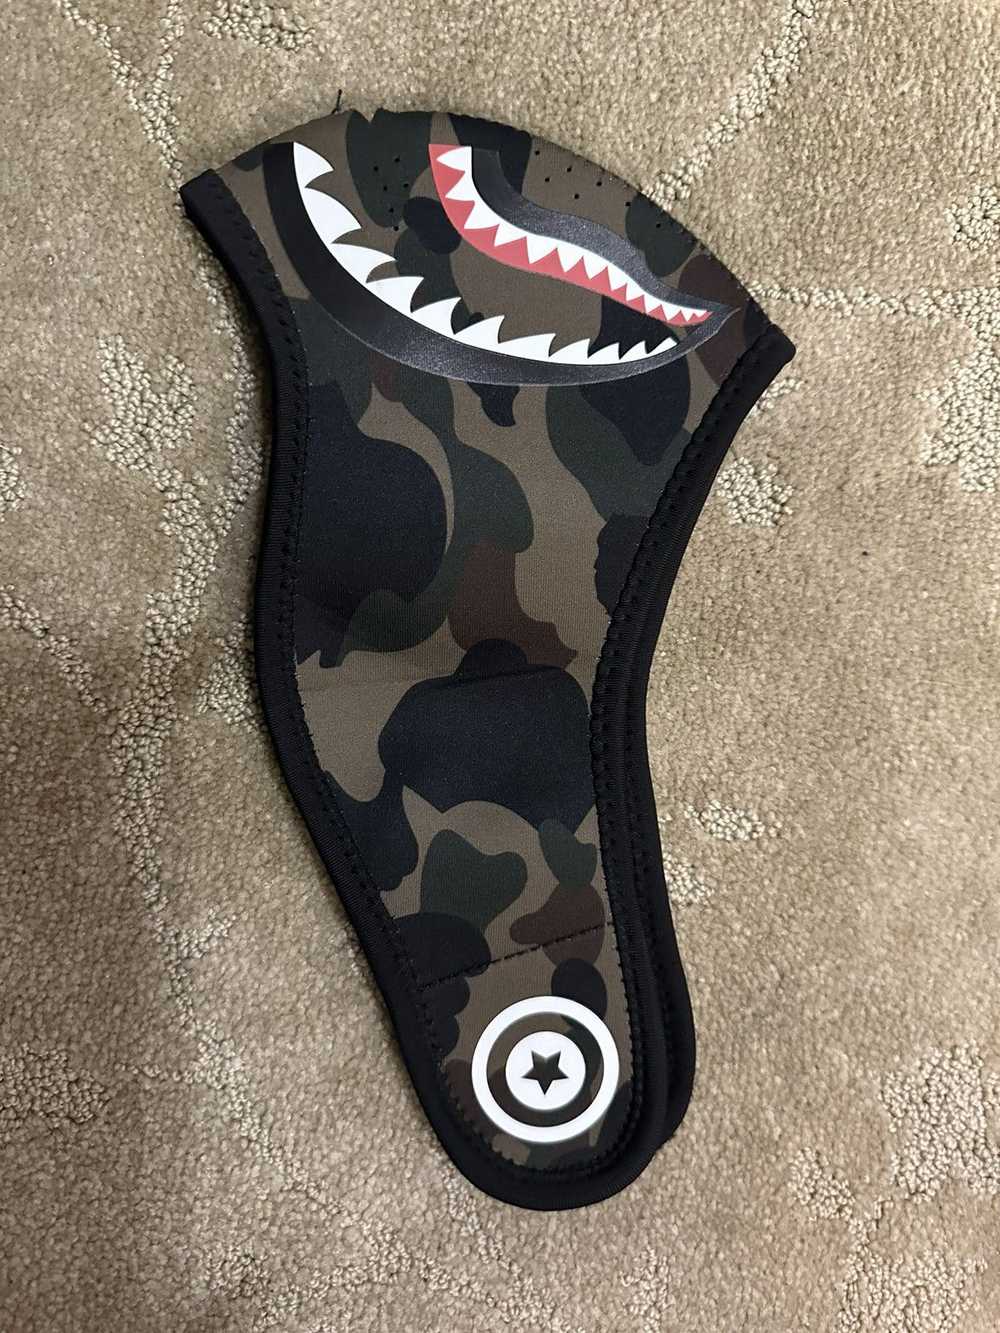 Bape 1st Camo Shark Face Mask - image 3